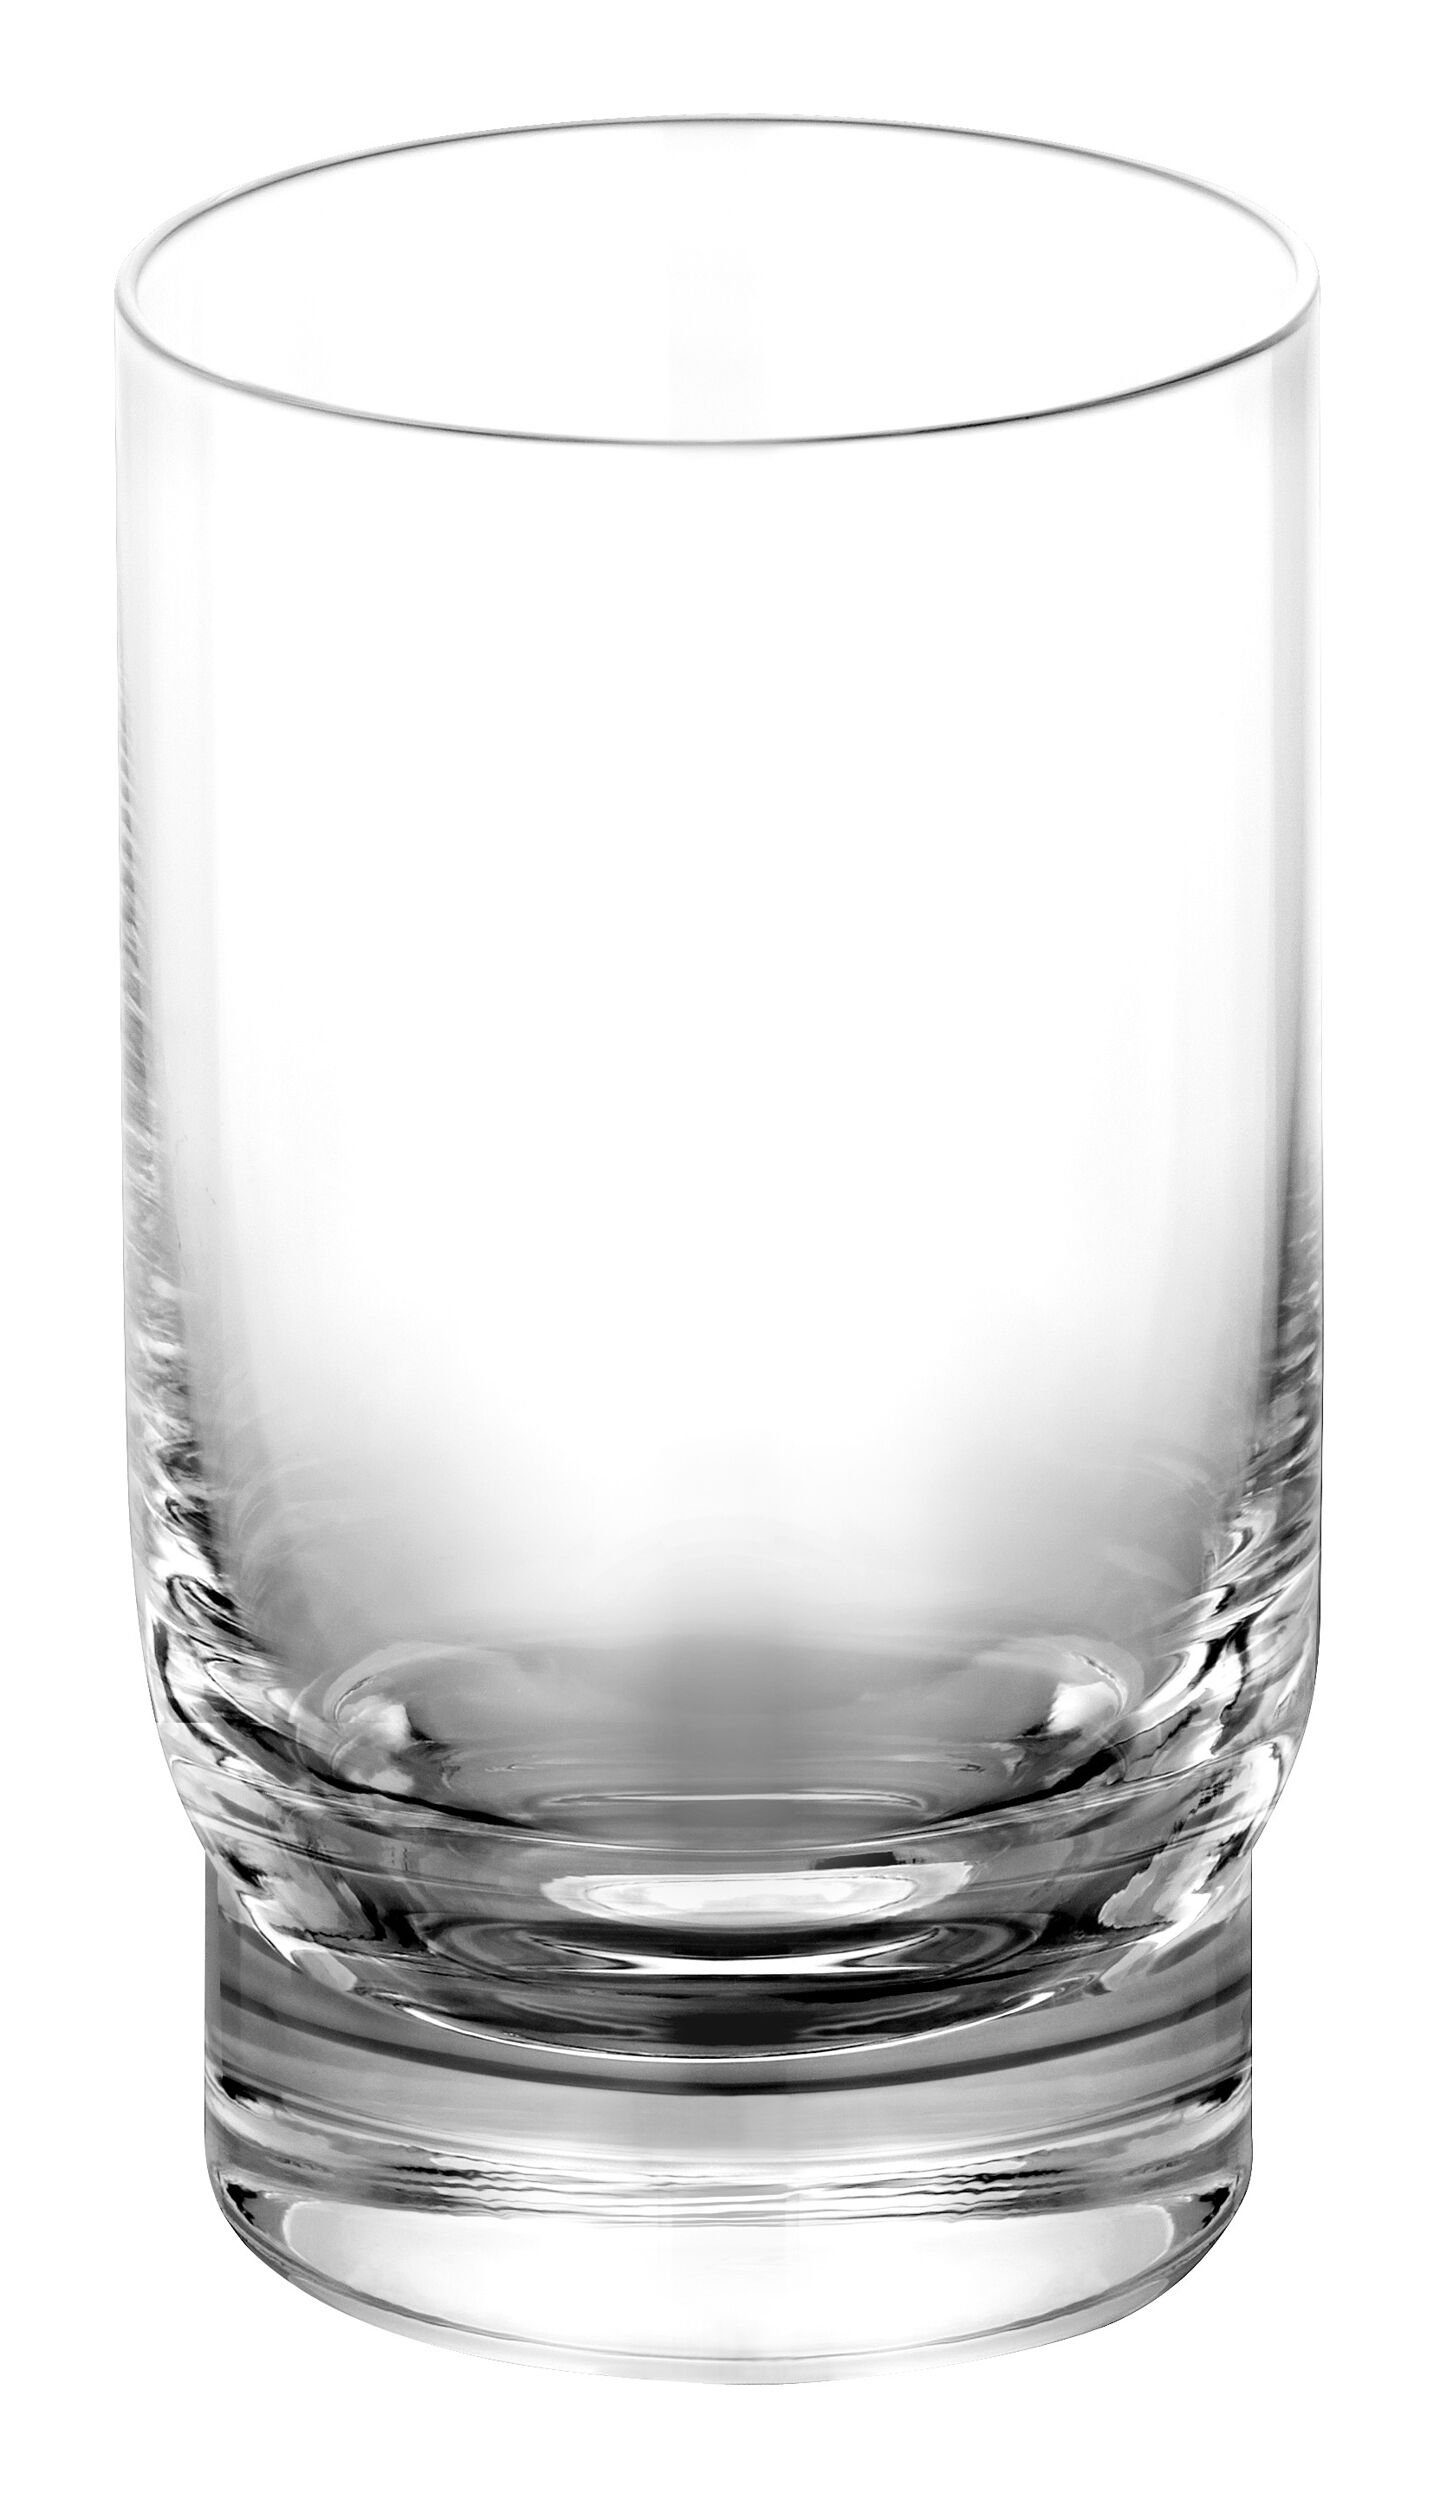 Keuco Zahnputzbecher Plan, Acrylglas-Mundbecher für Glashalter 14950 - Klar